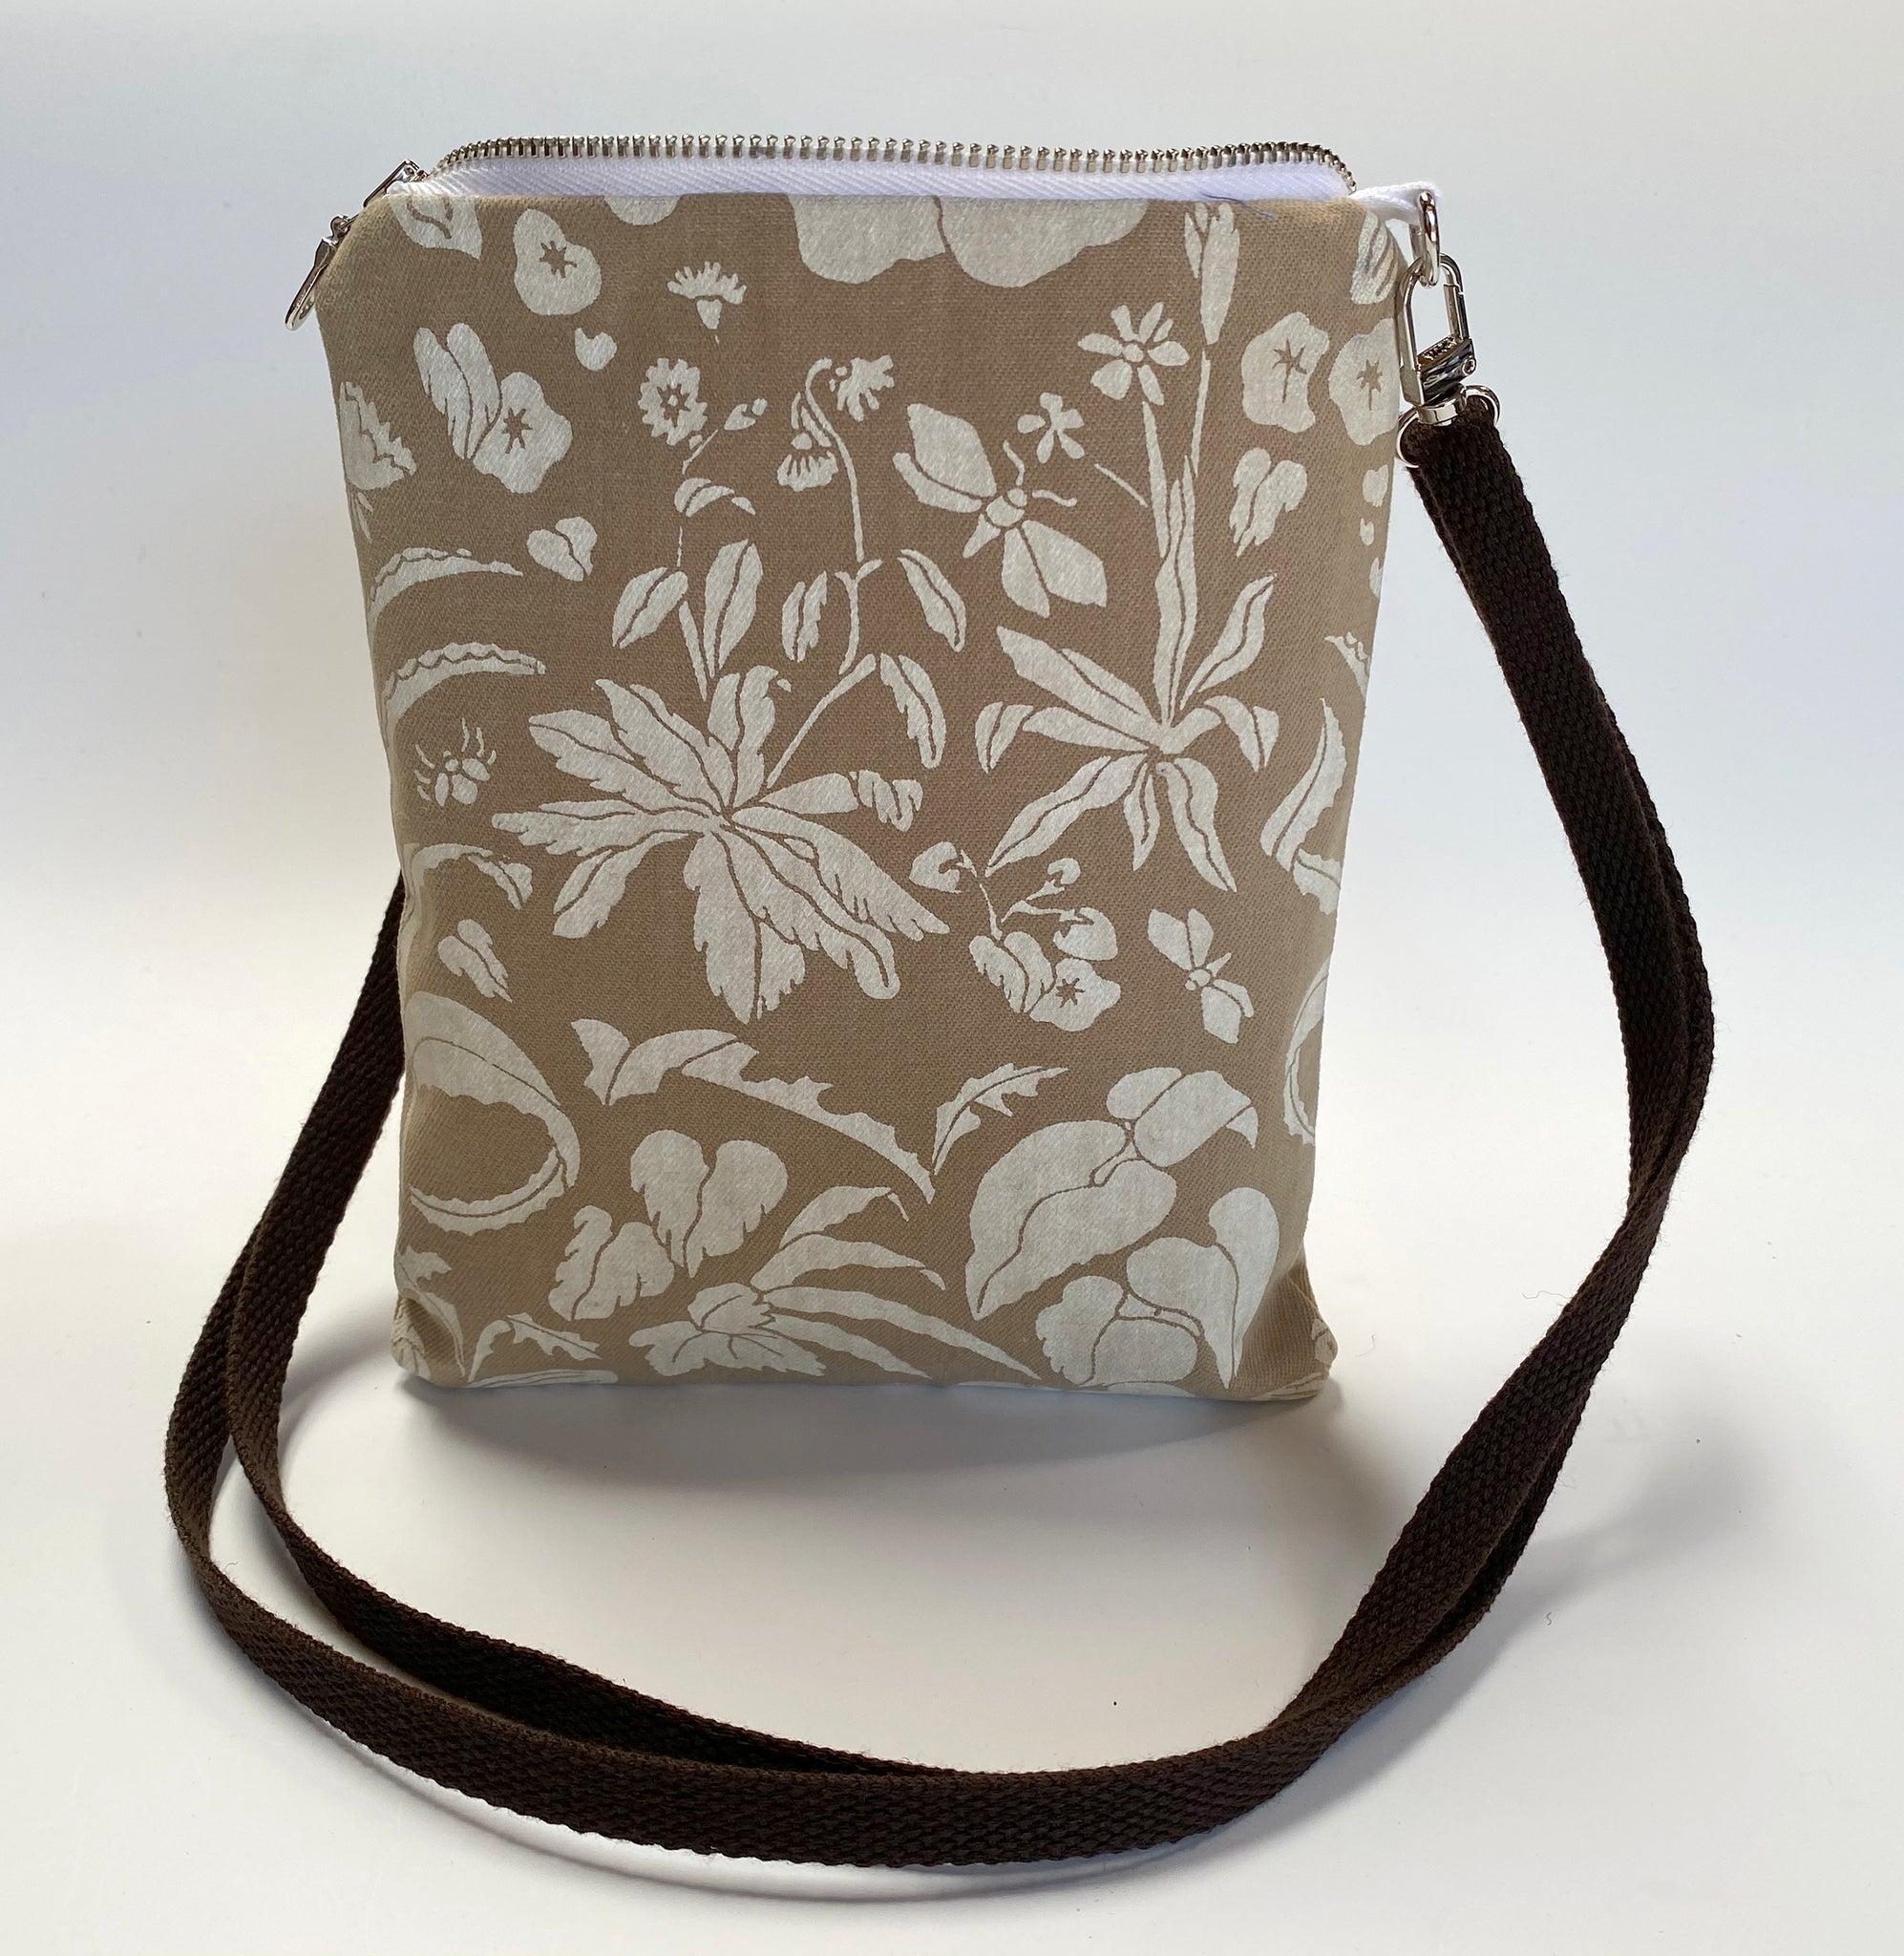 Less Is More- 1000 Flowers in Tan Cross Body Bag